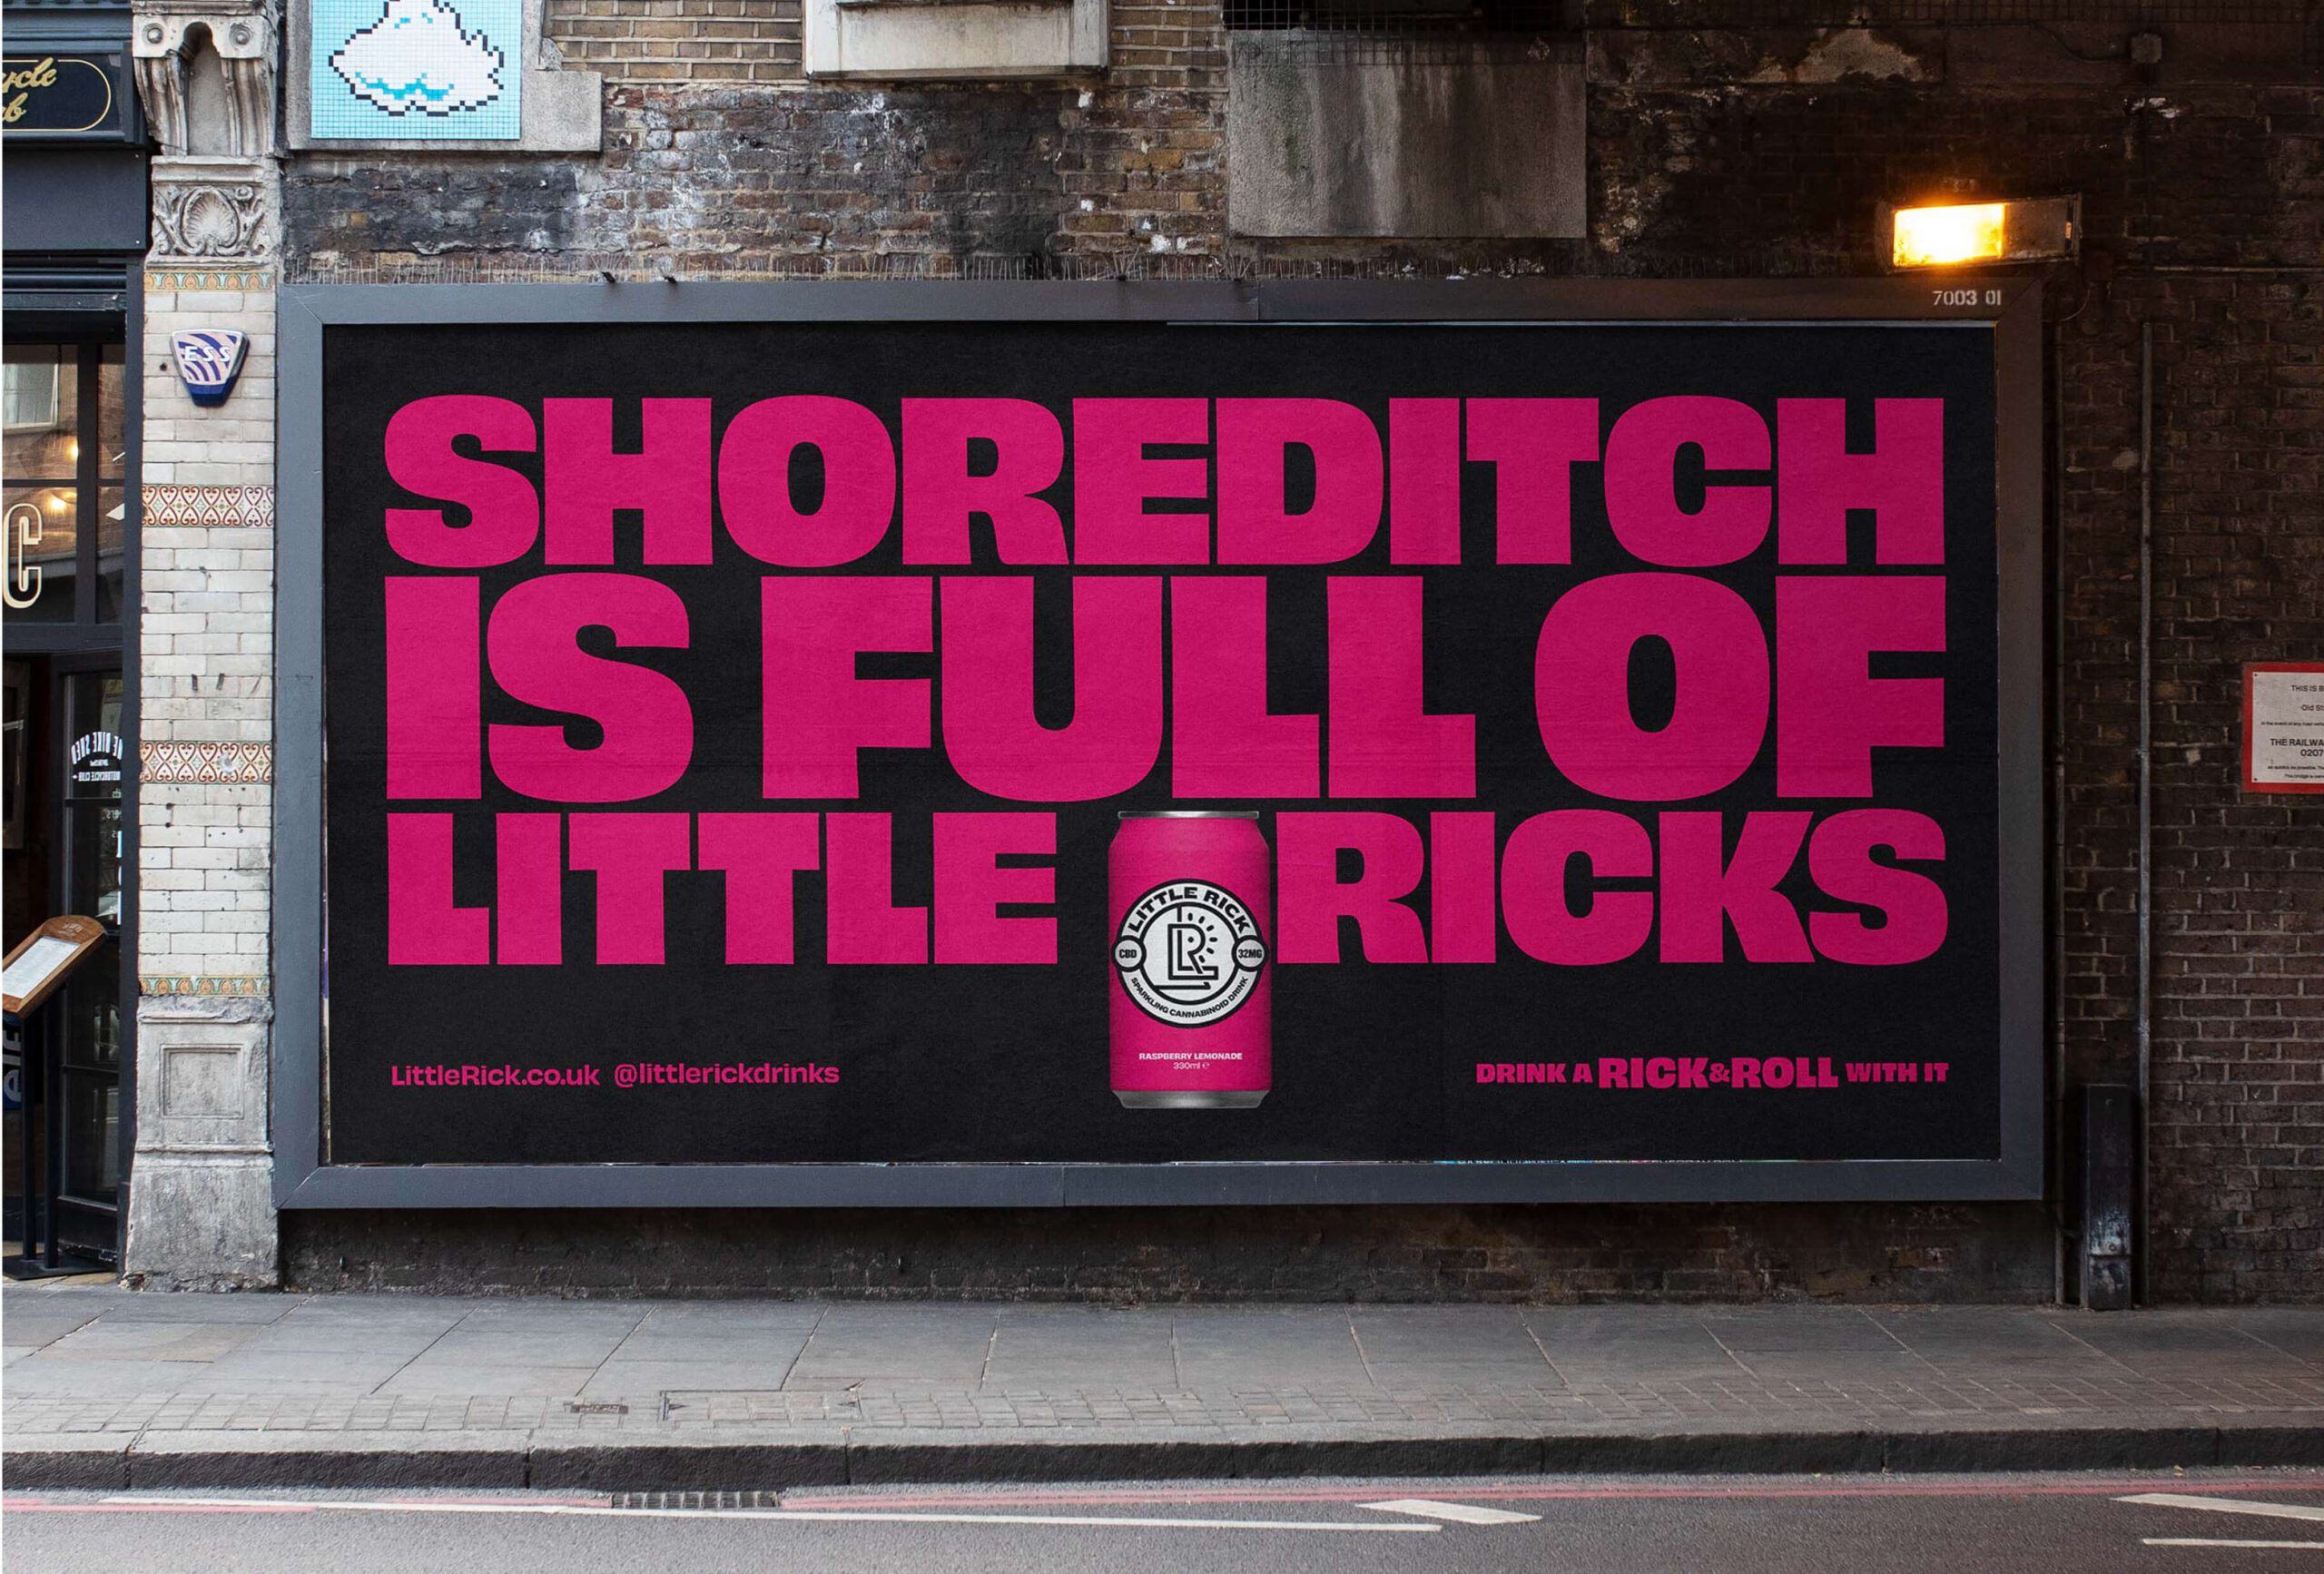 Little Rick by Now agency London